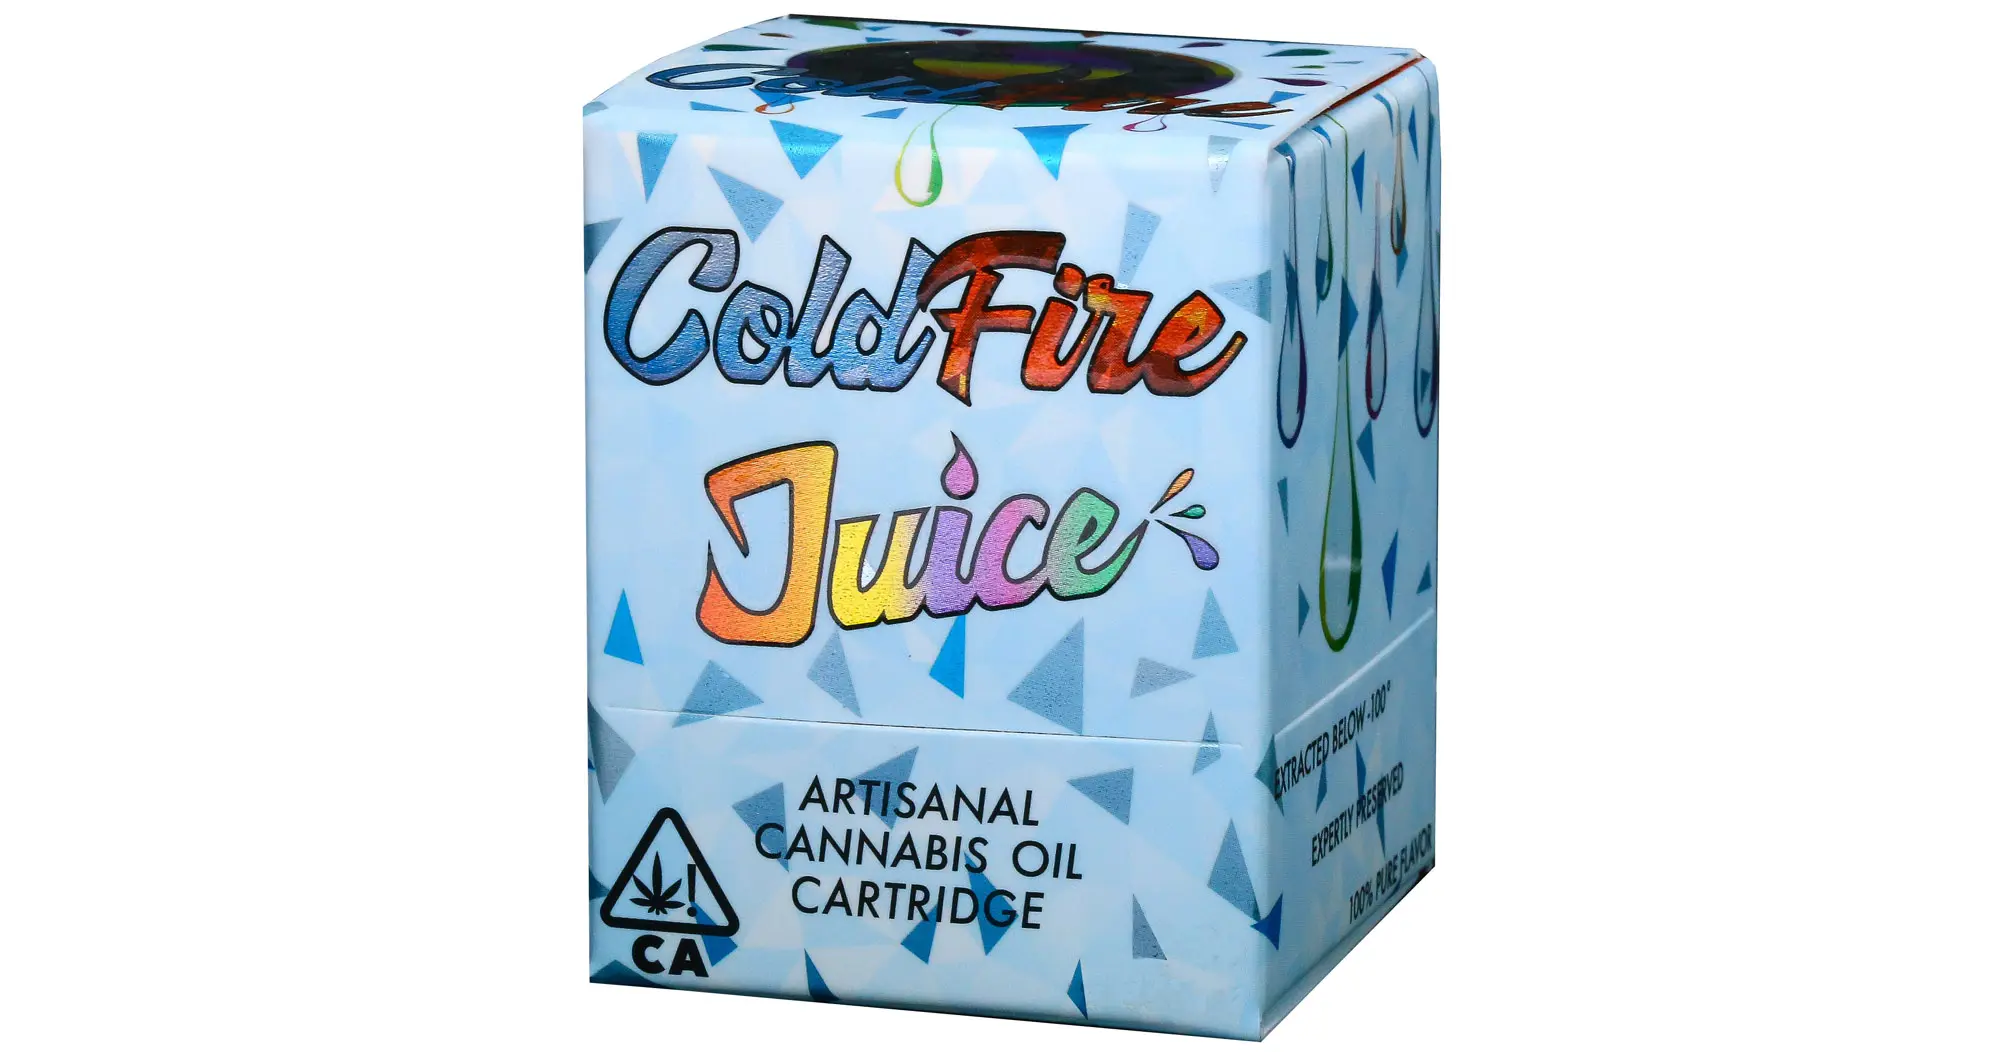 Whoa-Si-Whoa Juice Cartridge